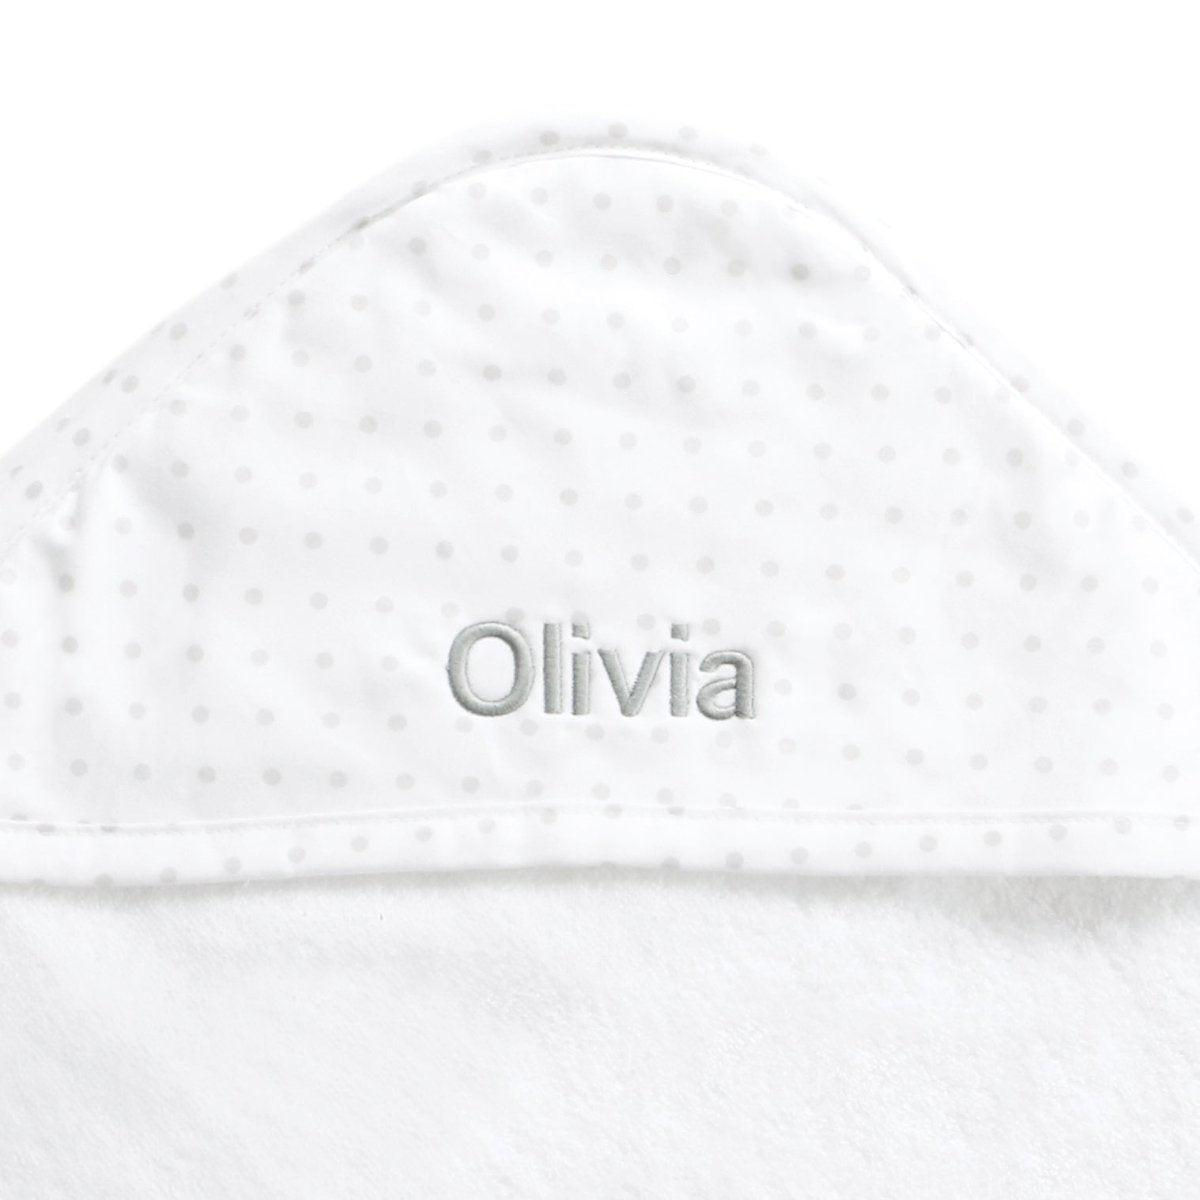 Personalised Polka Dot Hooded Towel - Grey - LOVINGLY SIGNED (HK)